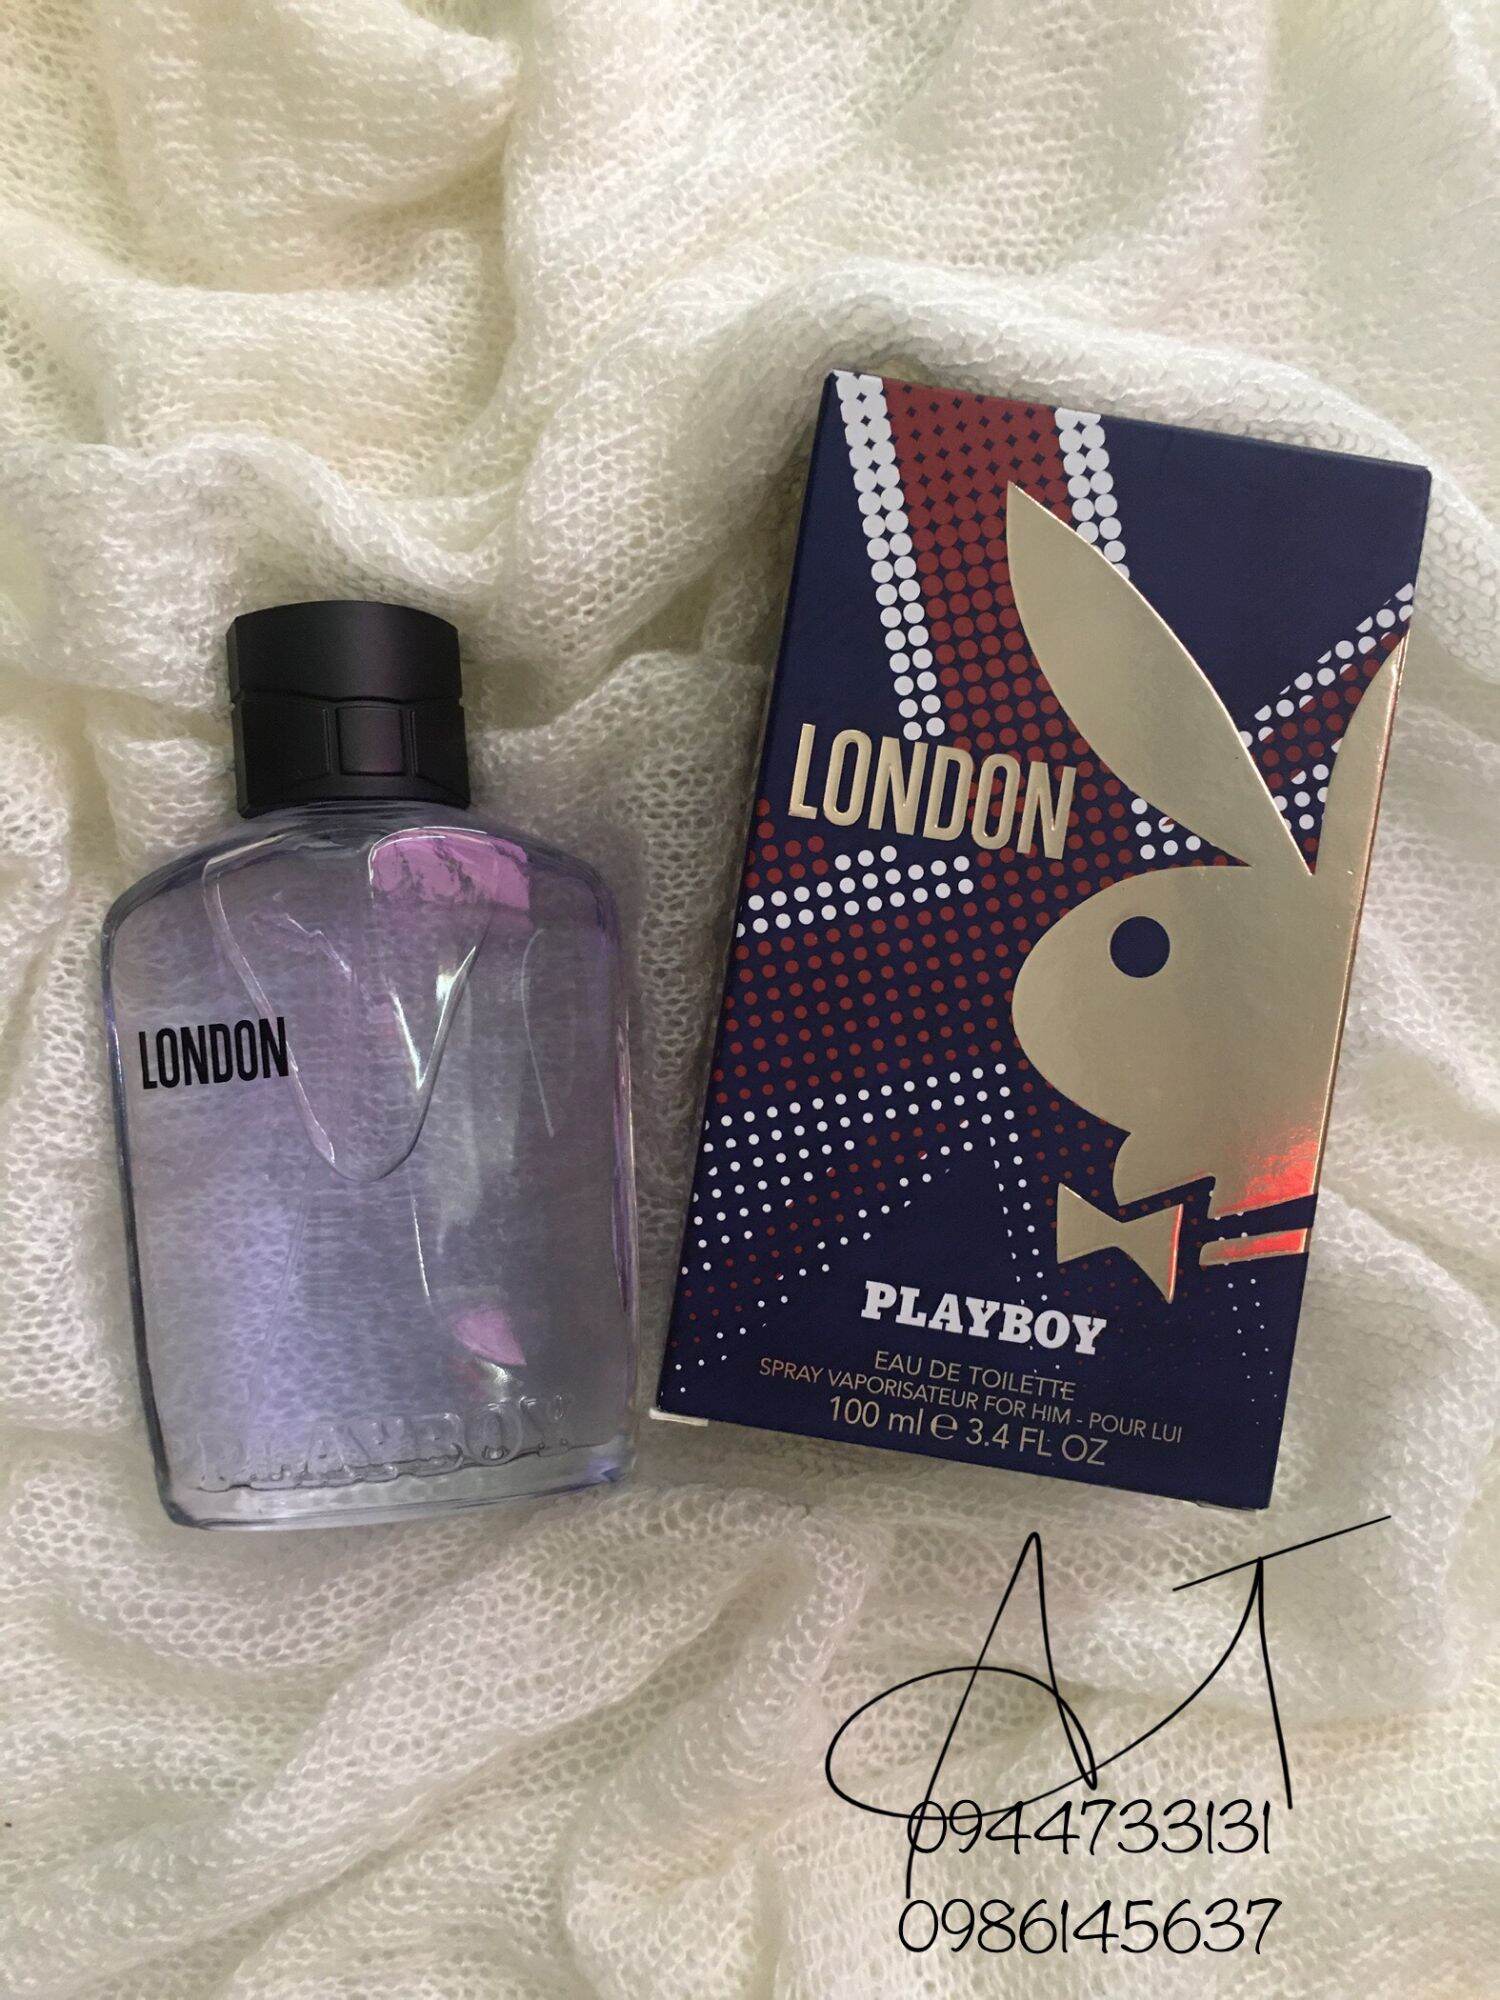 Playboy London for men